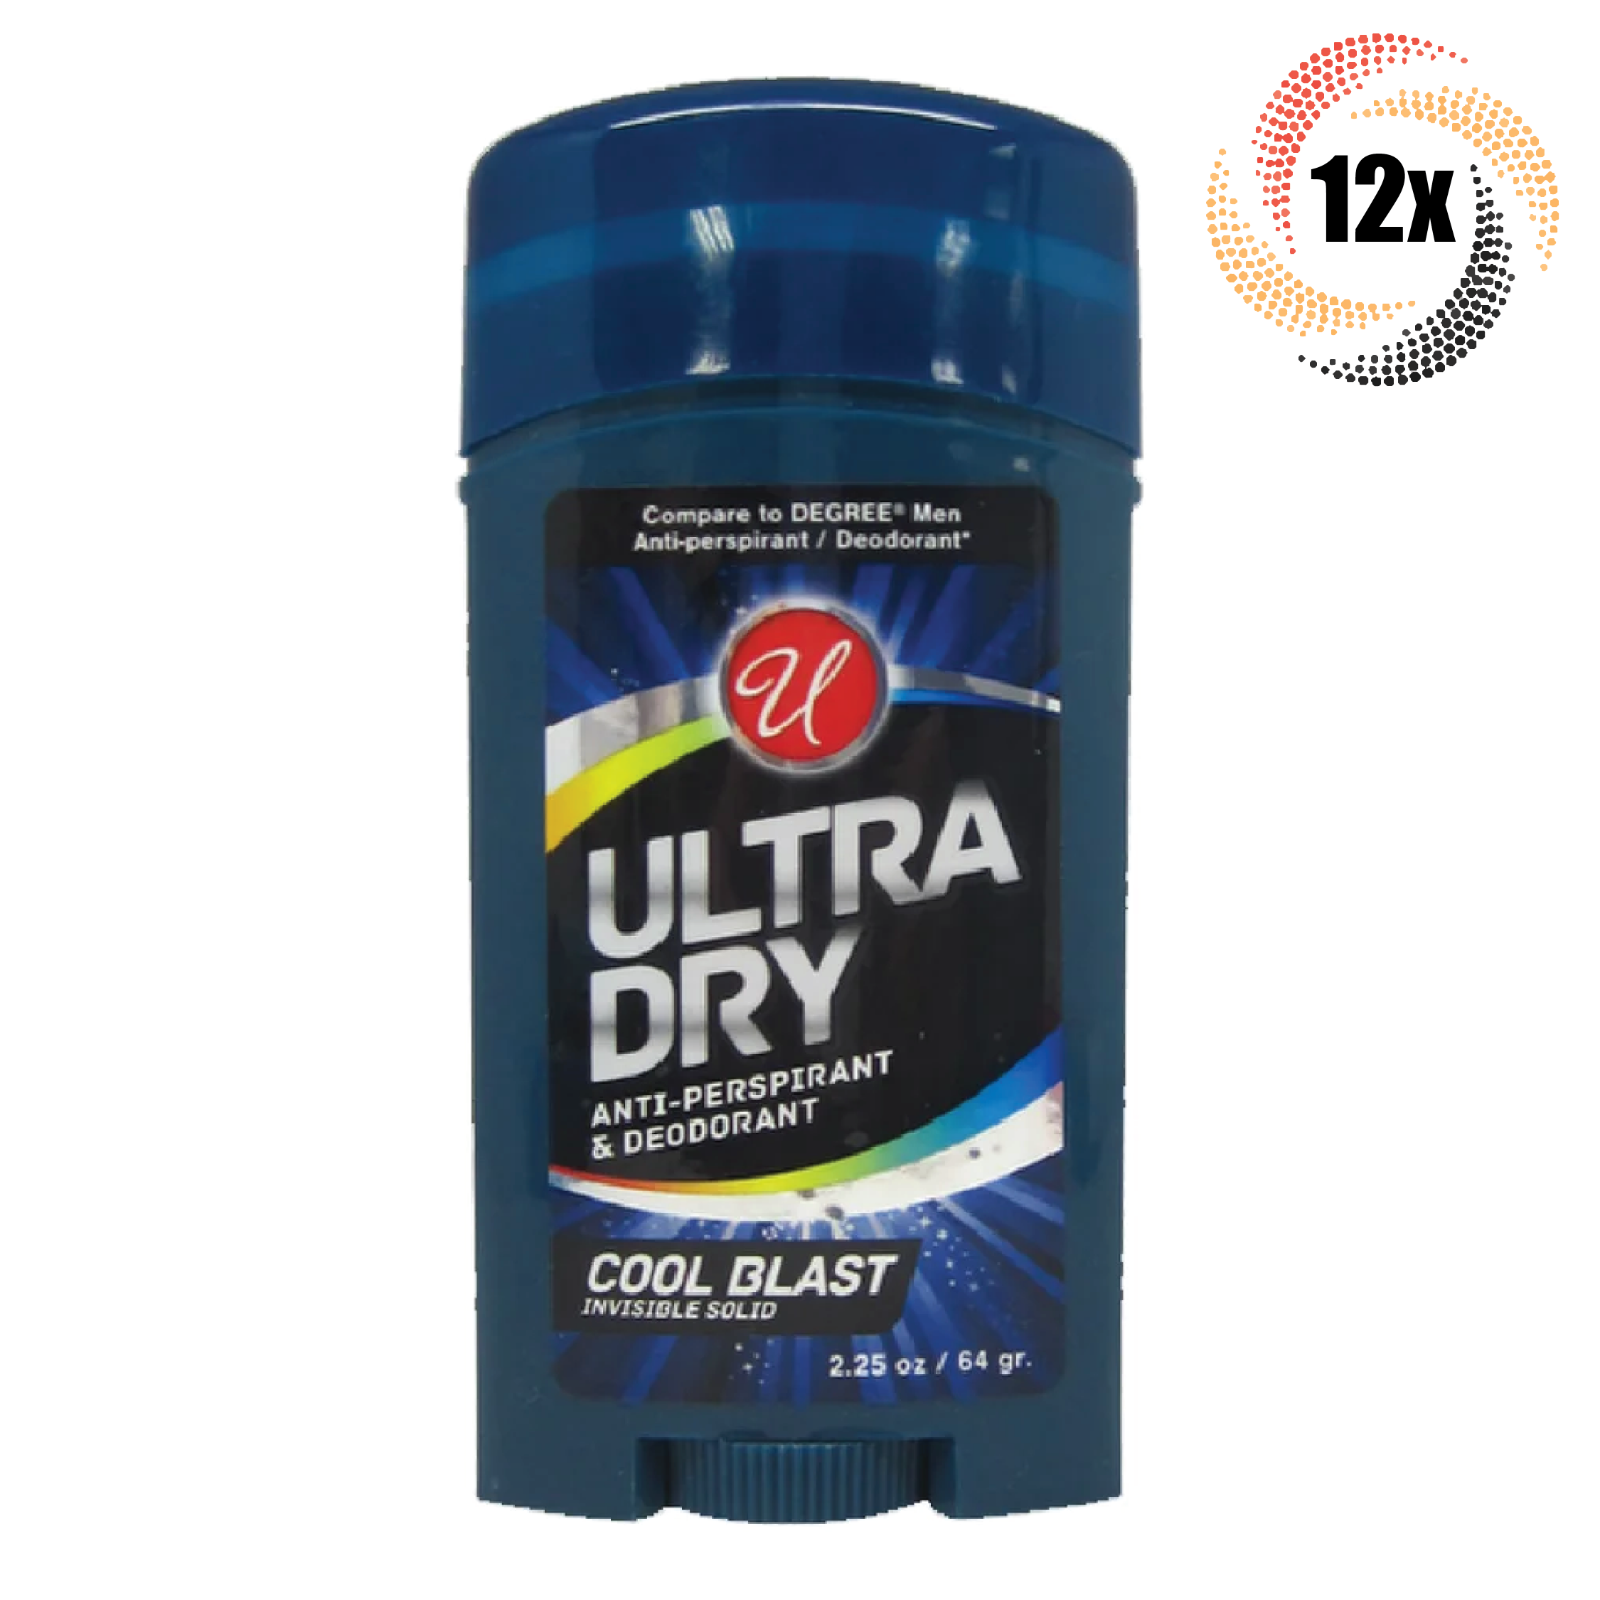 12x Sticks U Ultra Dry Cool Blast Scent Invisible Solid Deodorant | 2.25oz | - $28.81